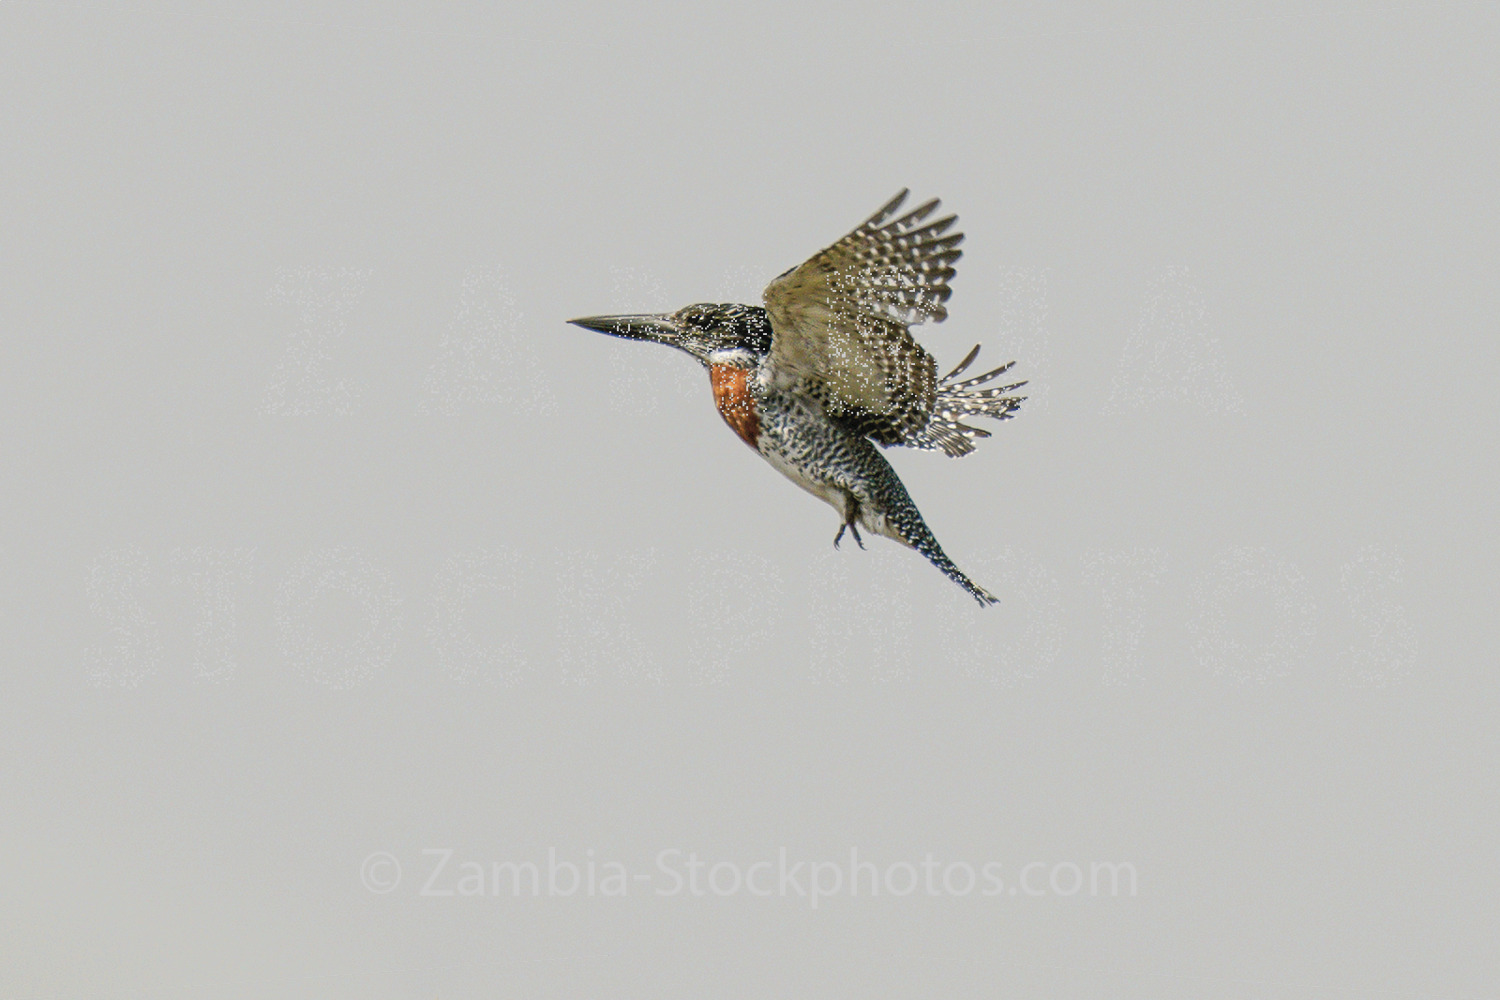 Kingfisher 2.jpg - Zamstockphotos.com